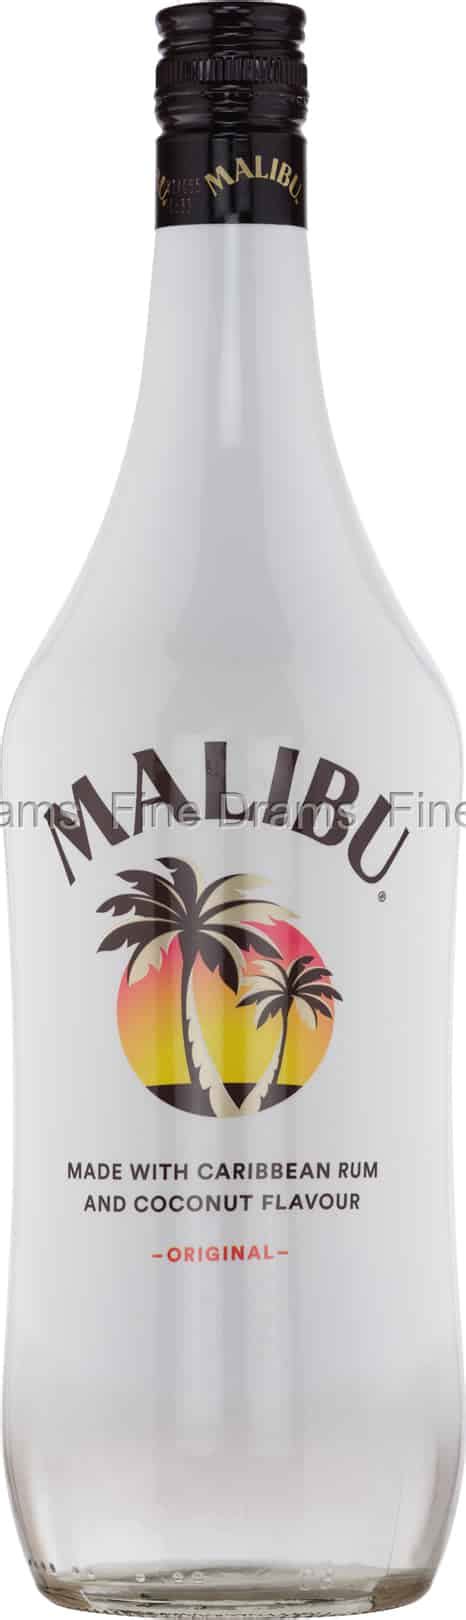 Malibu Caribbean Rum With Coconut Flavour 1 Liter